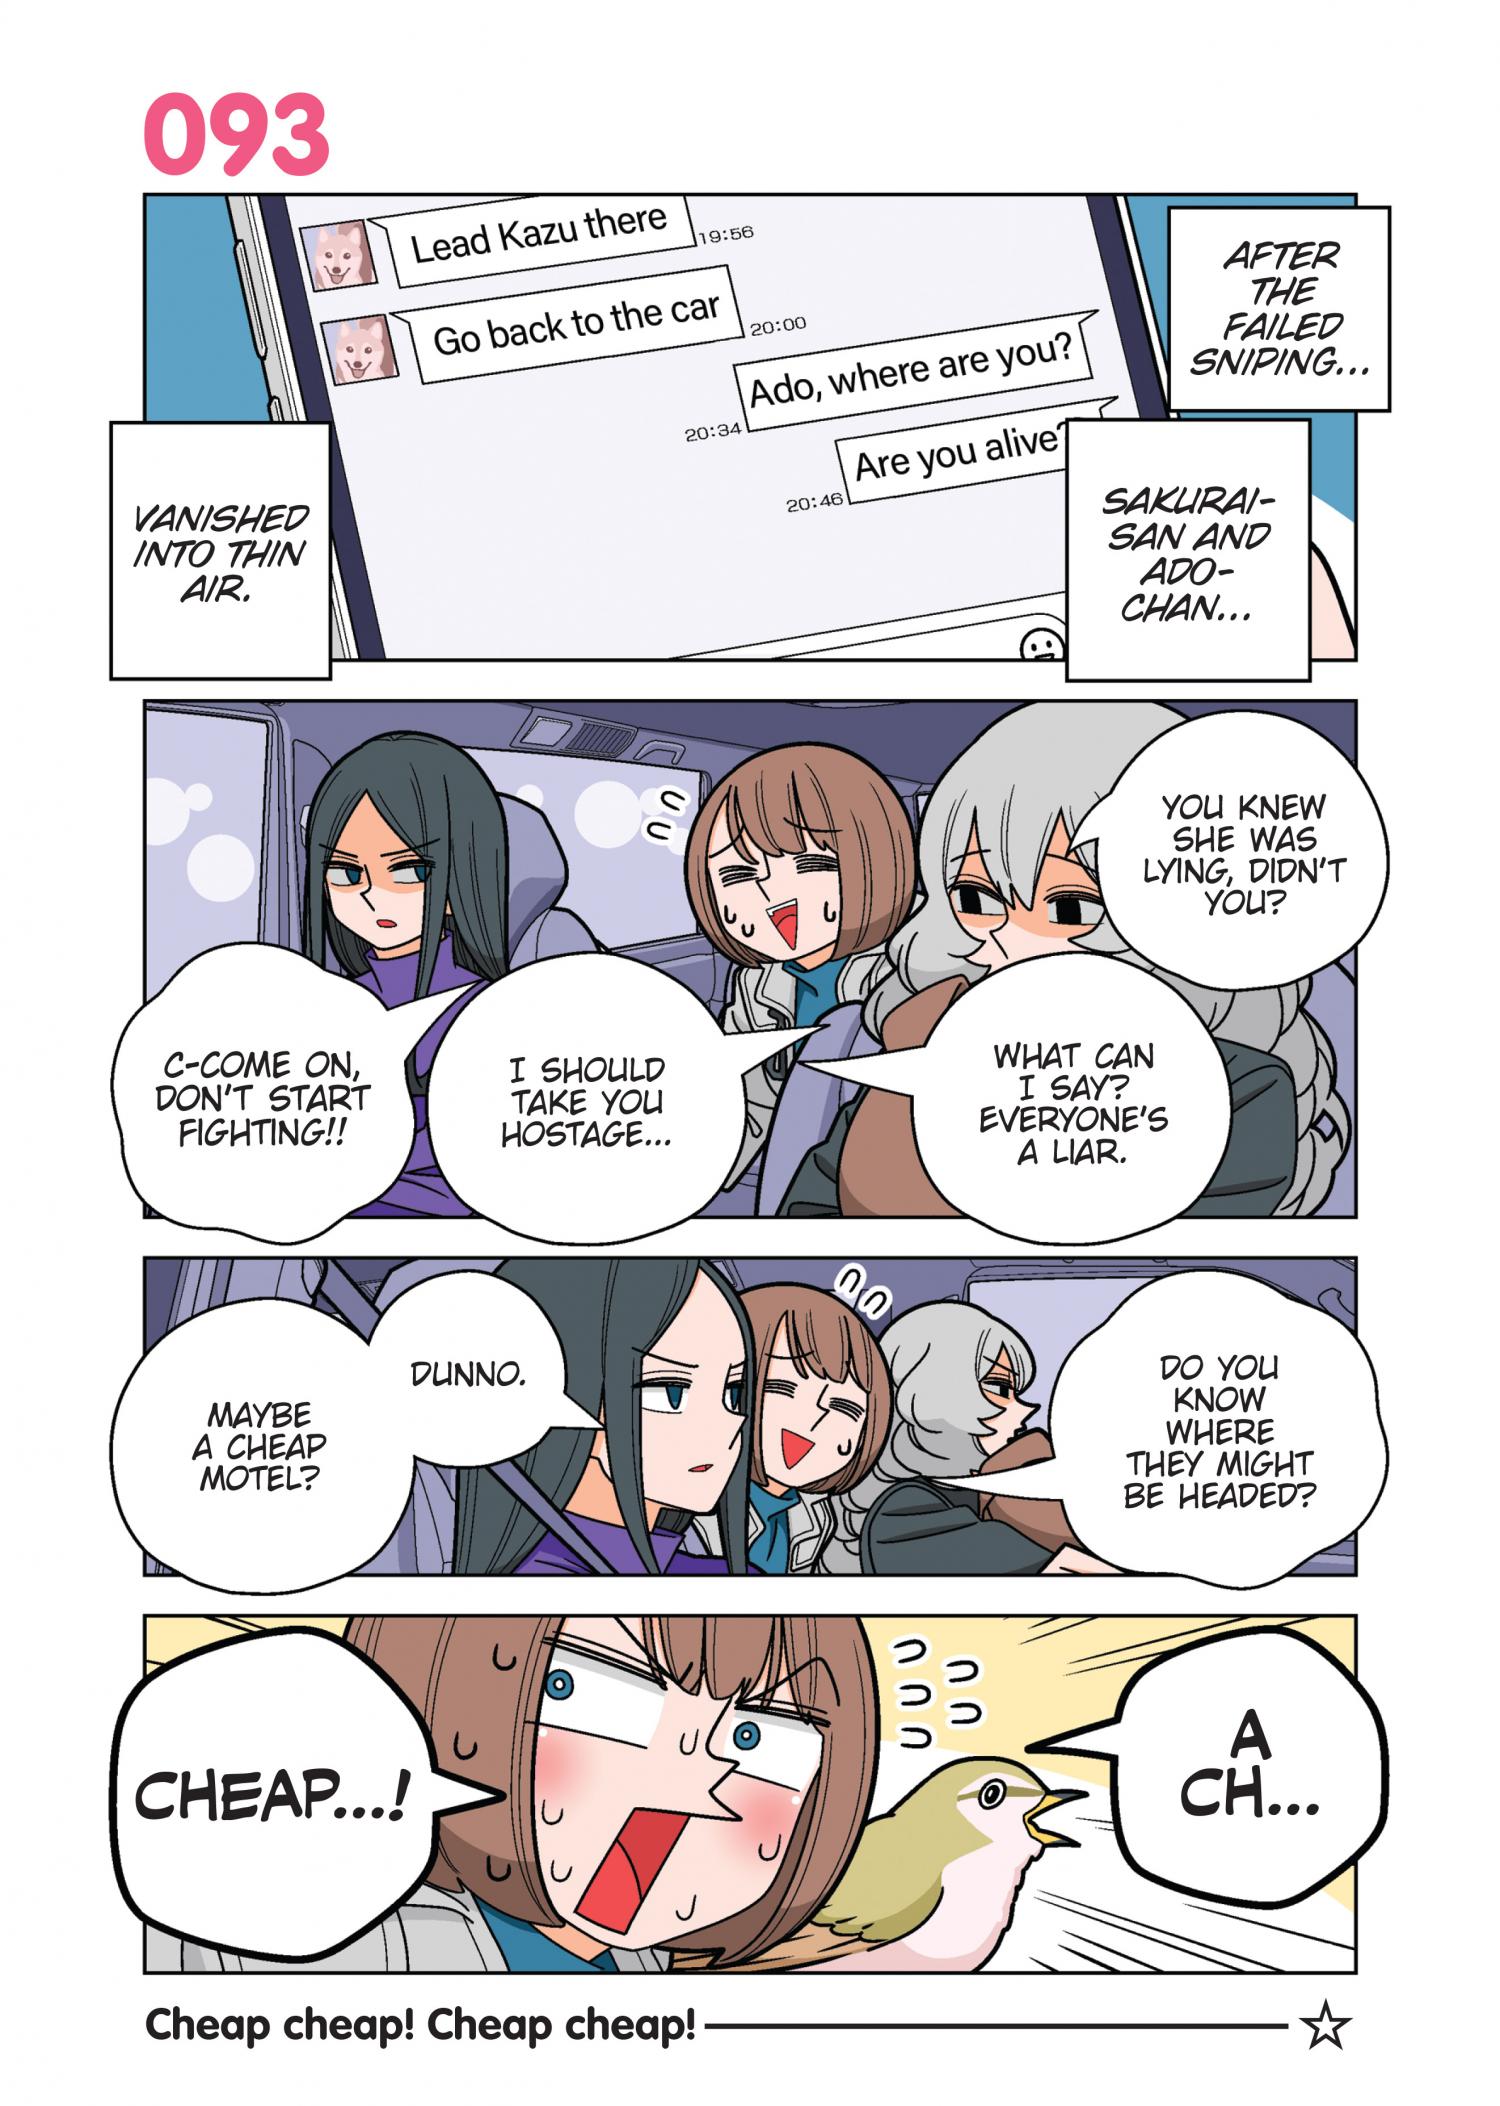 Kanako's Life As An Assassin - Page 2